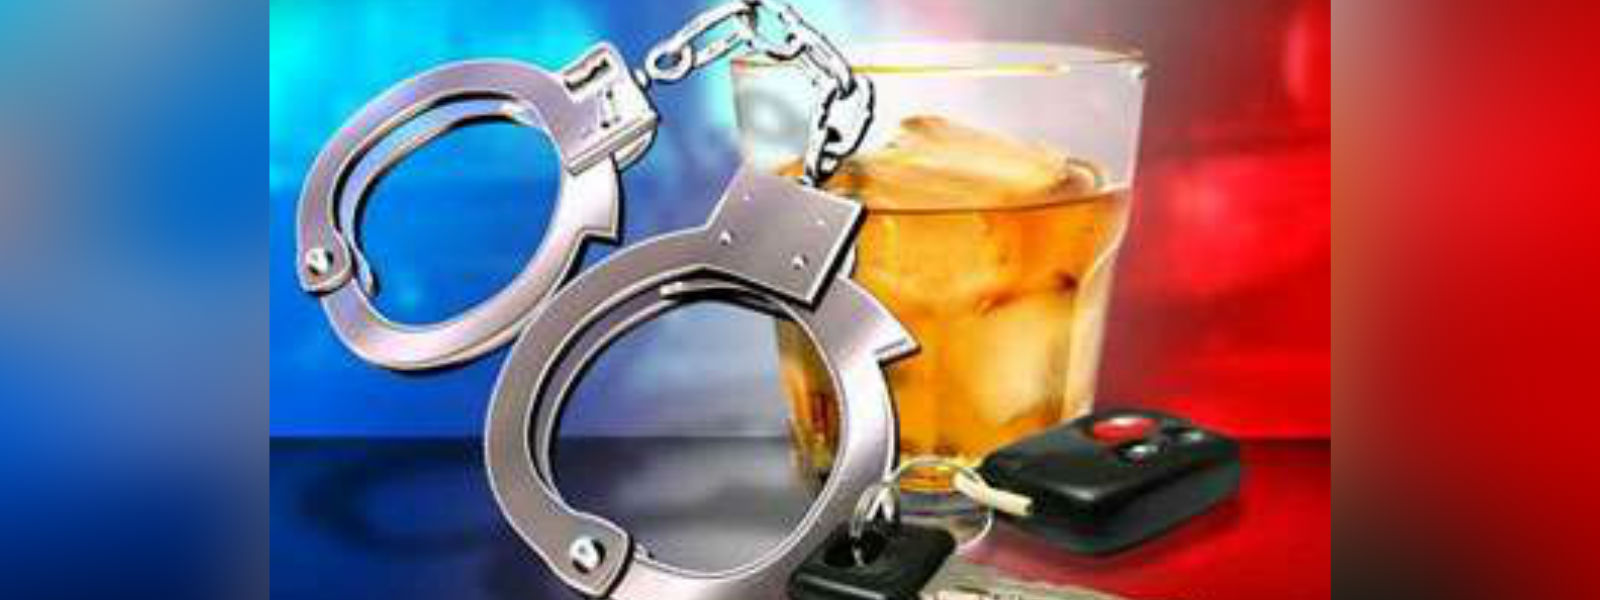 329 drunk drivers arrested